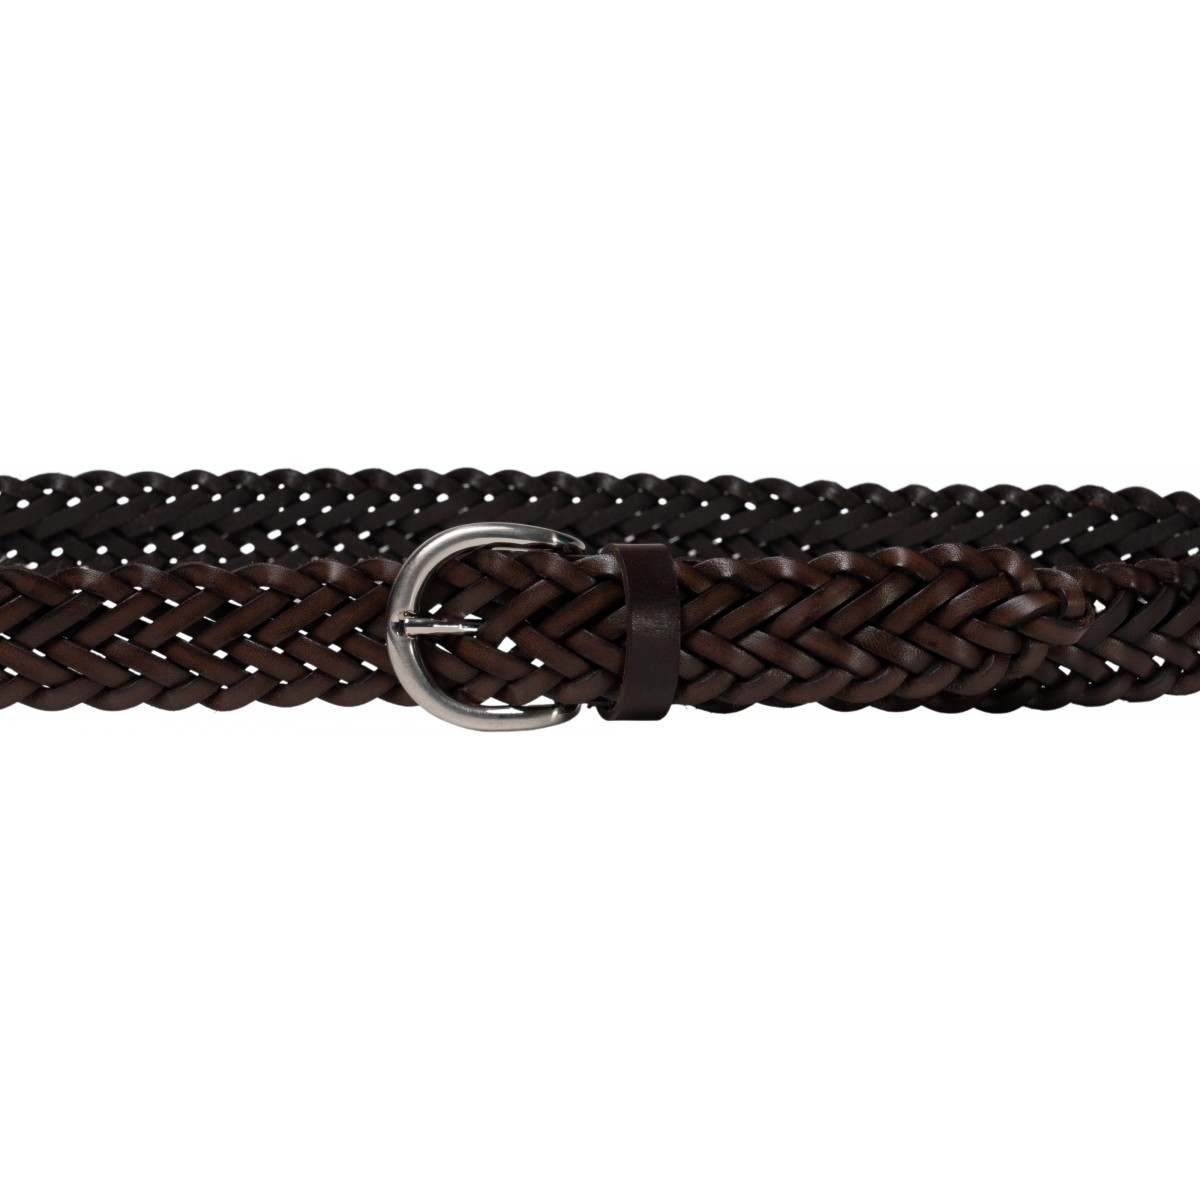 Hand woven women's belt in dark brown leather